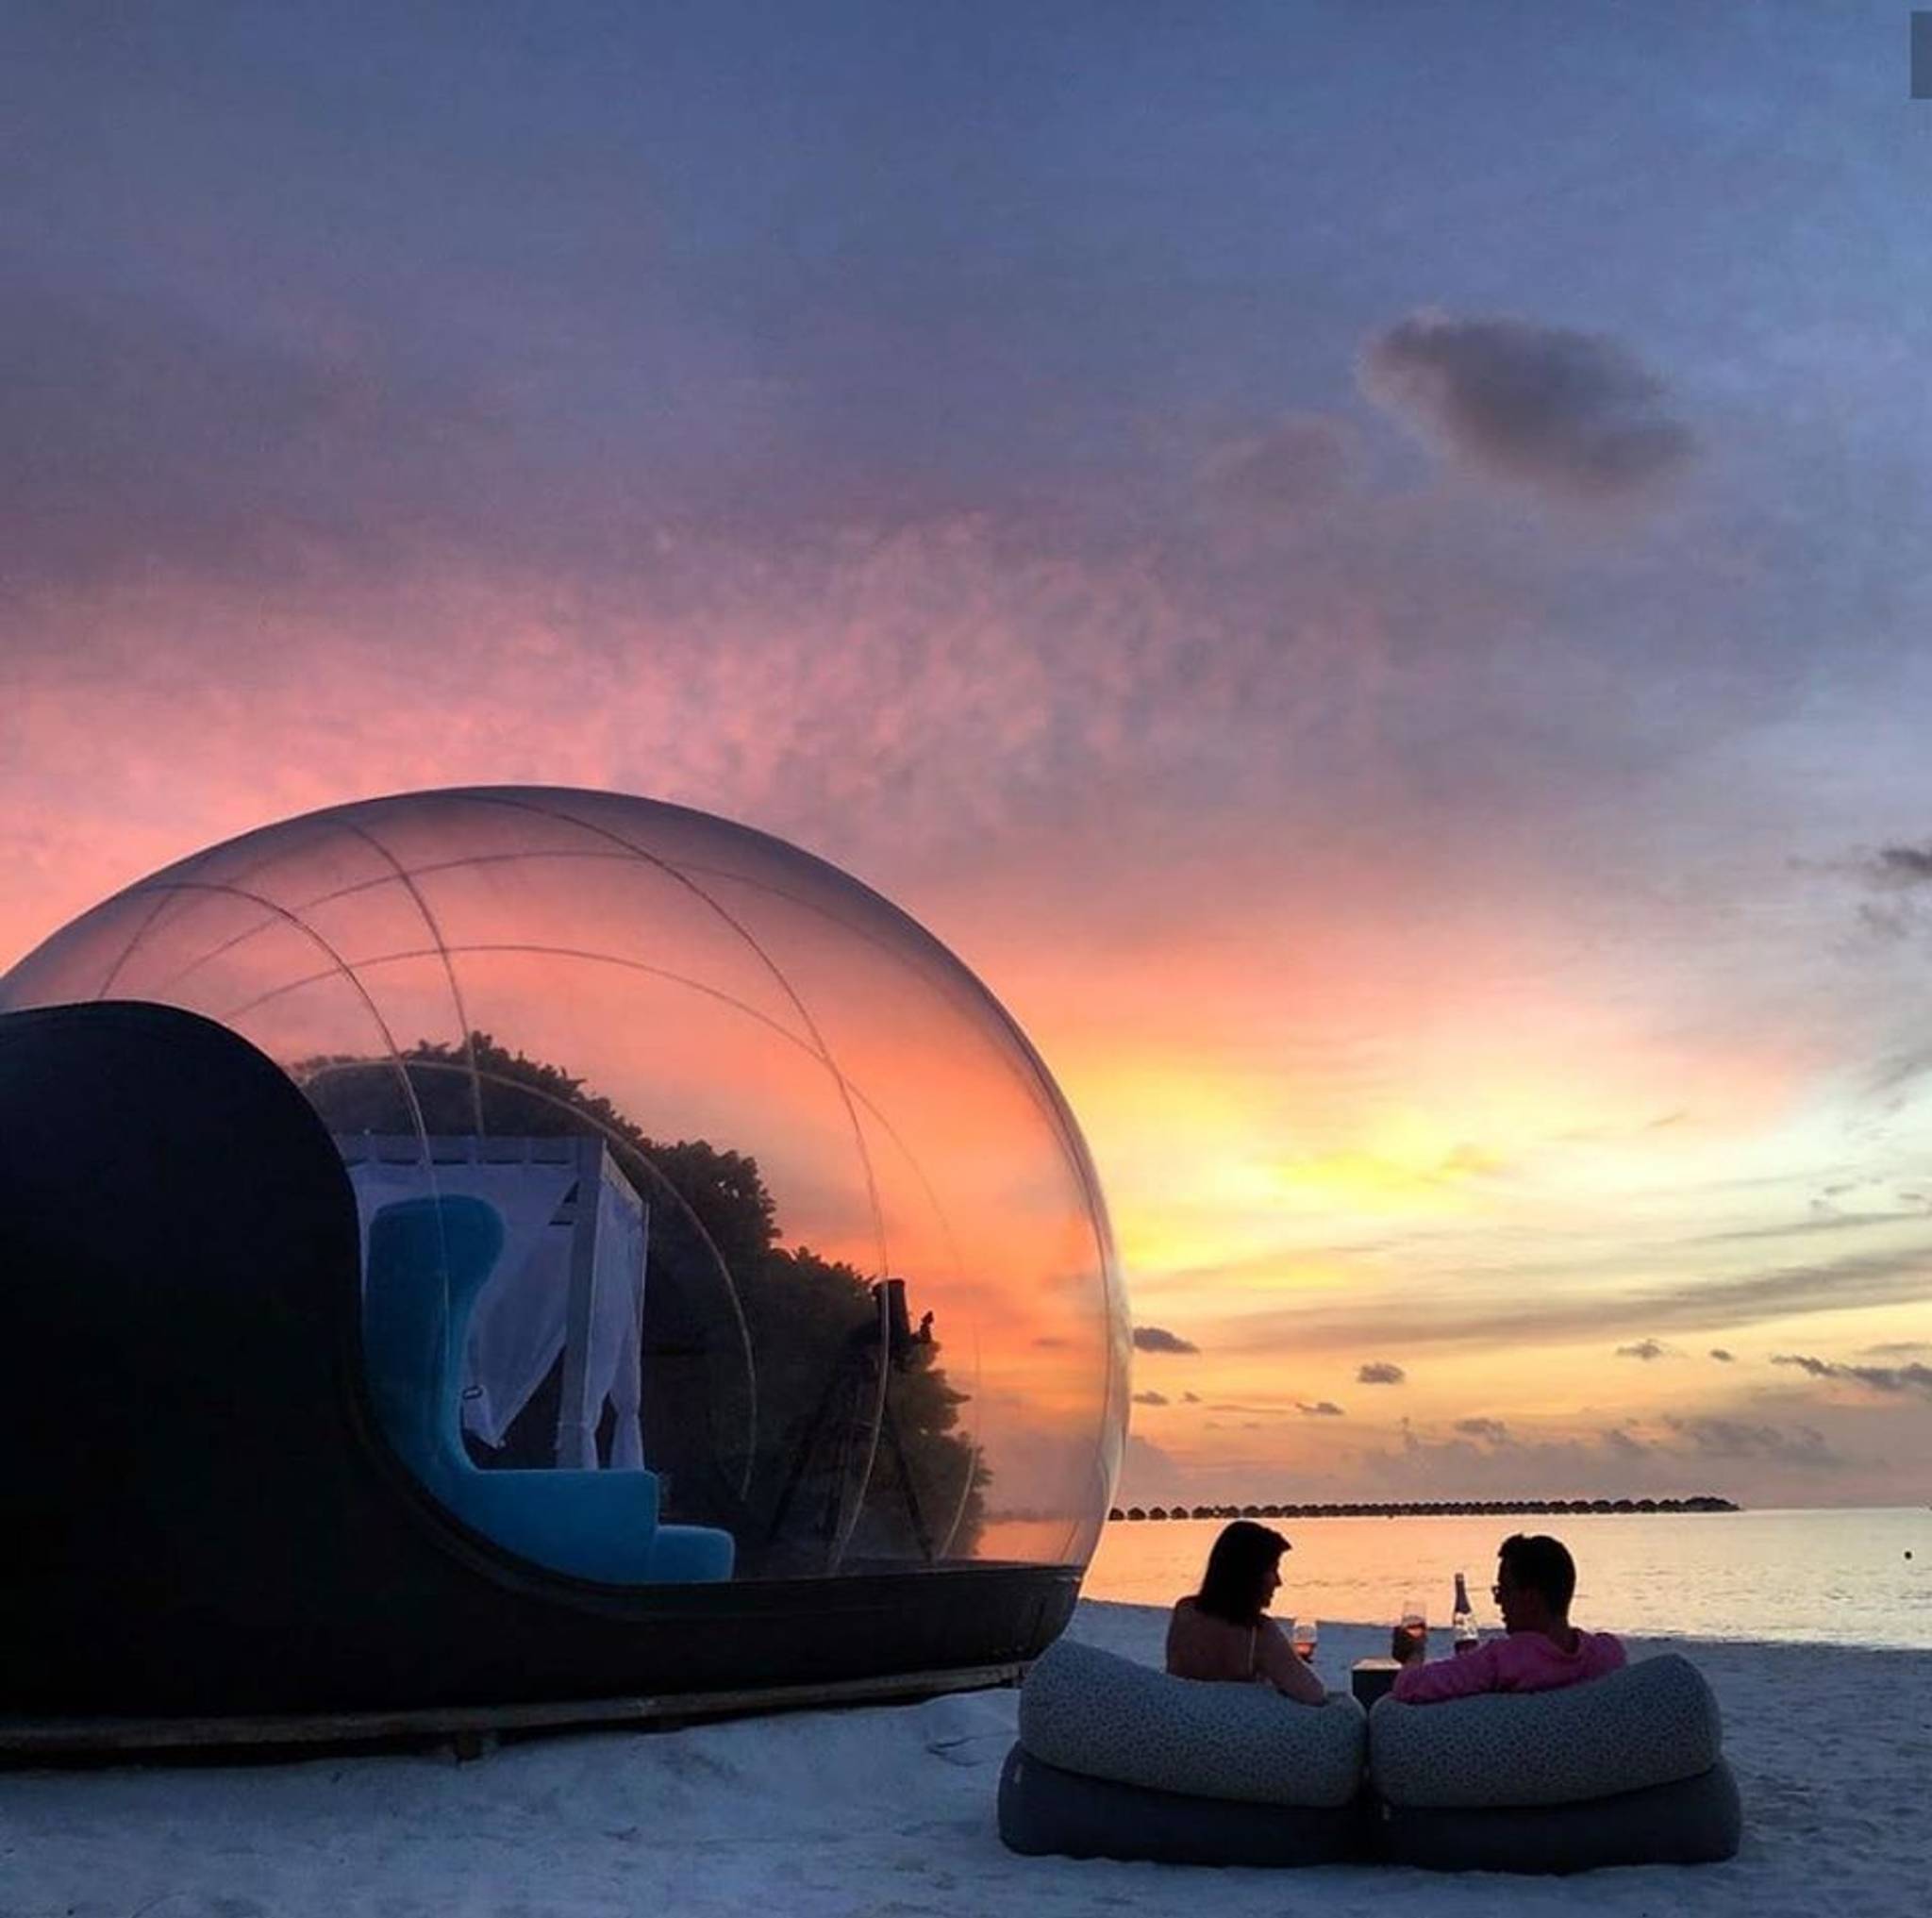 Beach bubbles bring novel allure to post-covid travel